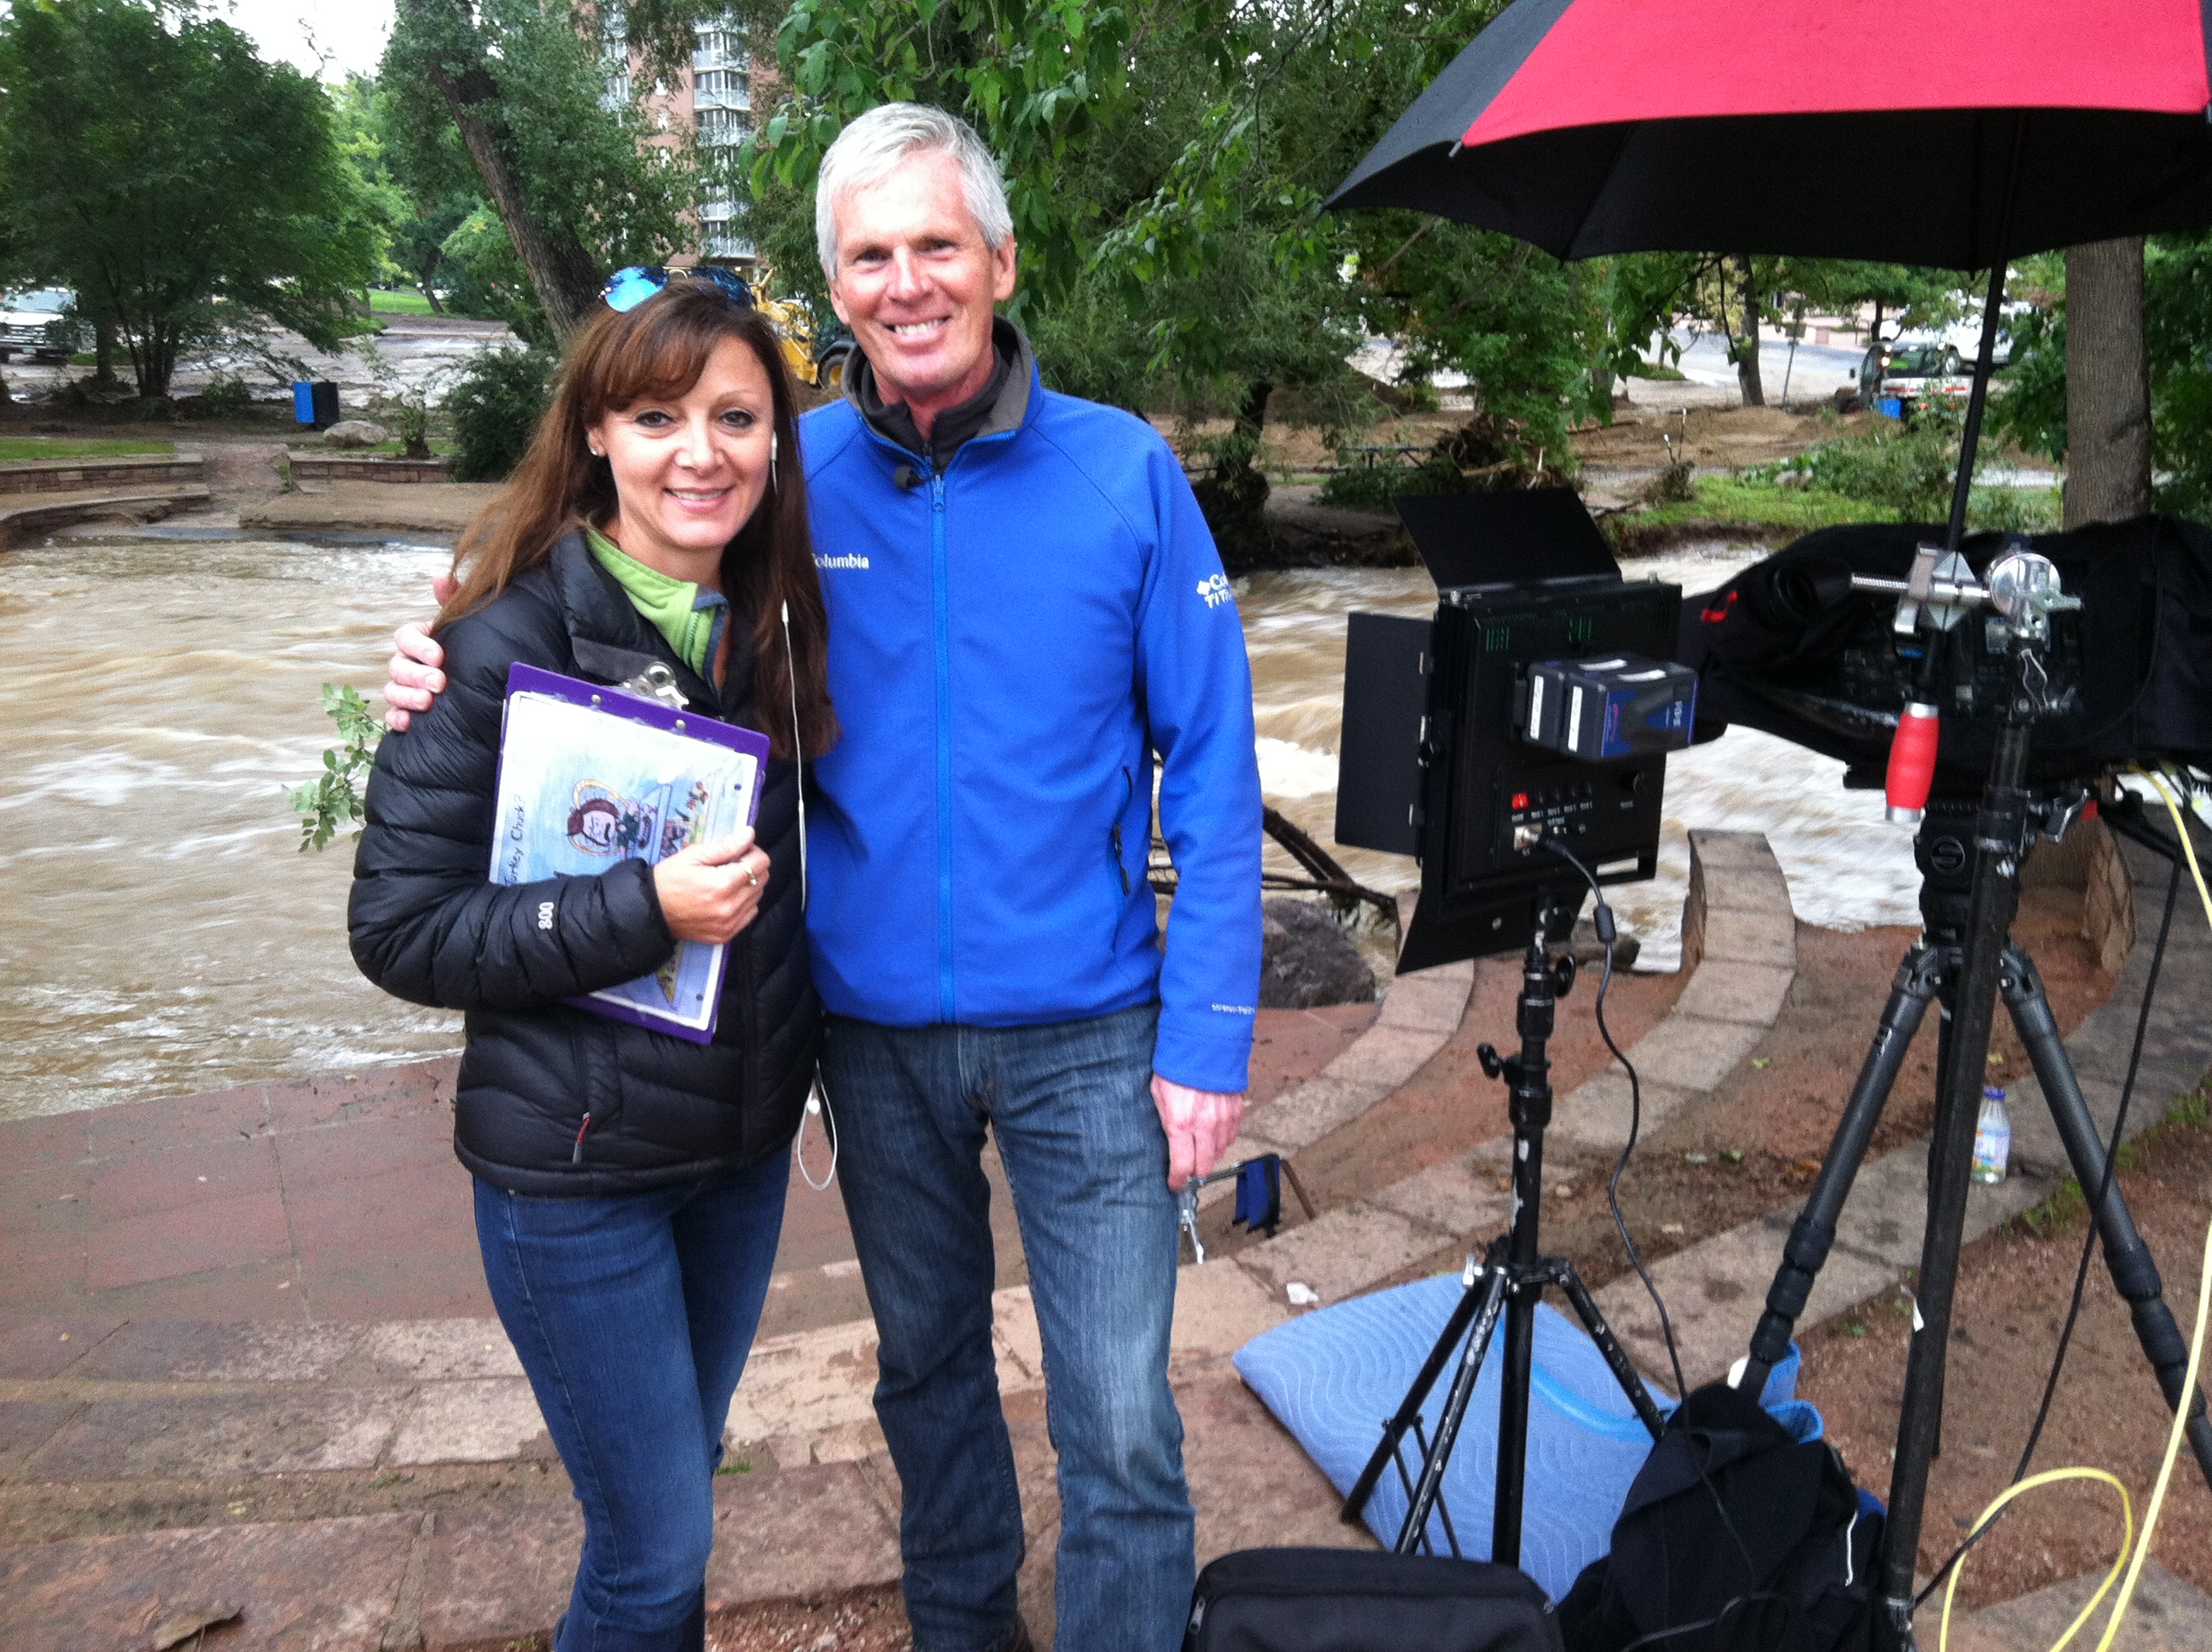 Allison Dalvit with Reporter Jim Hooley covering the Boulder, Colorado floods for Al Jazeera America news.